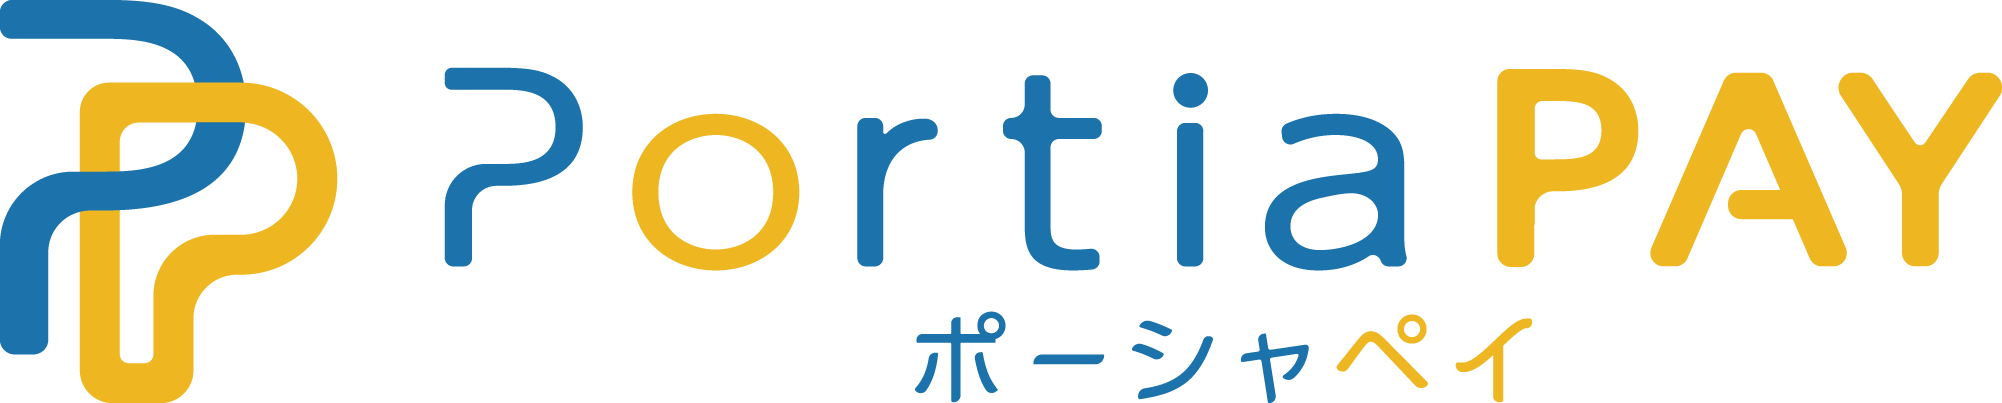 Portiapay_katakana